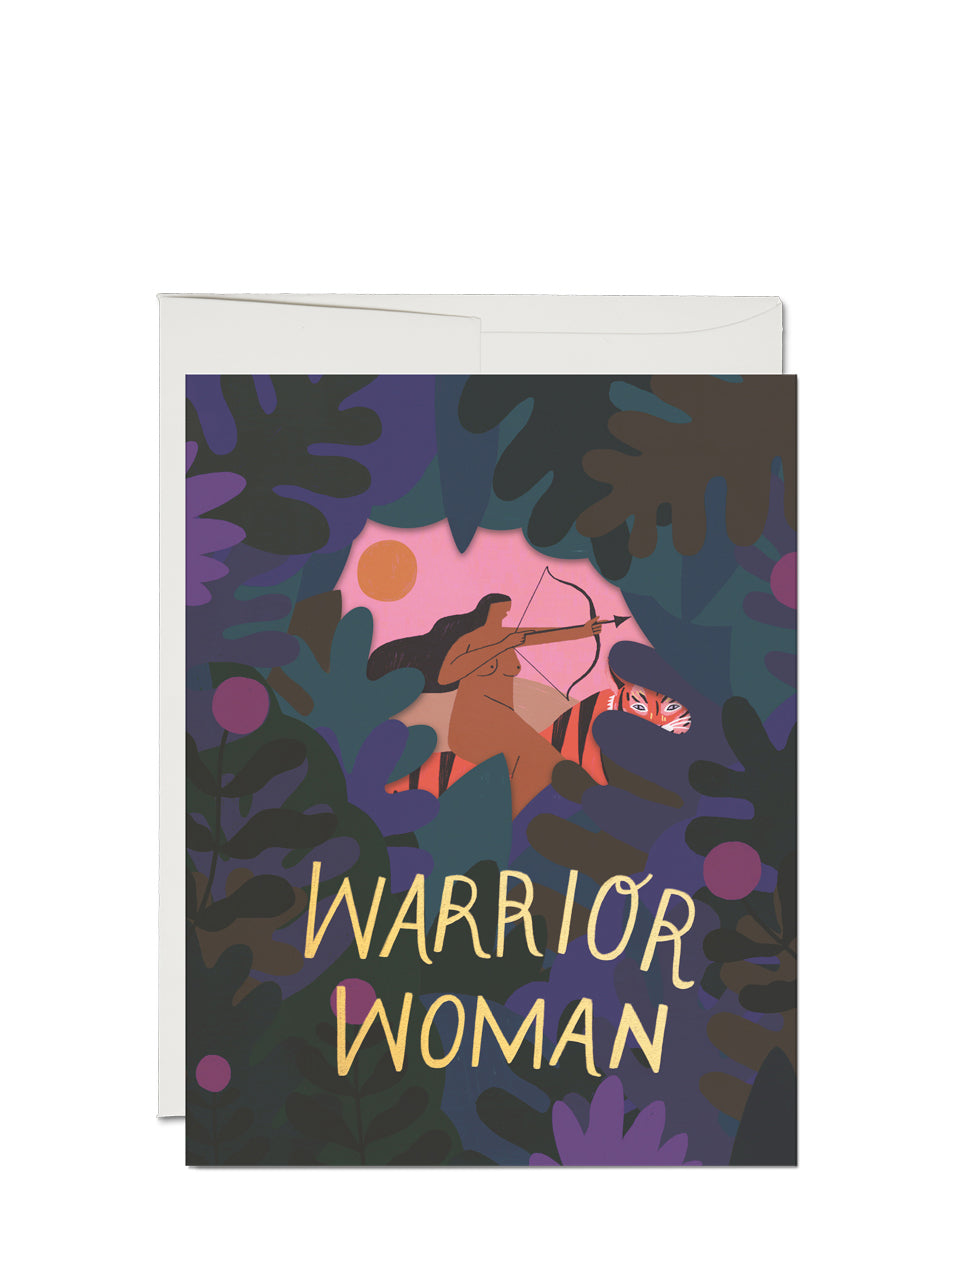 Warrior woman encouragement card